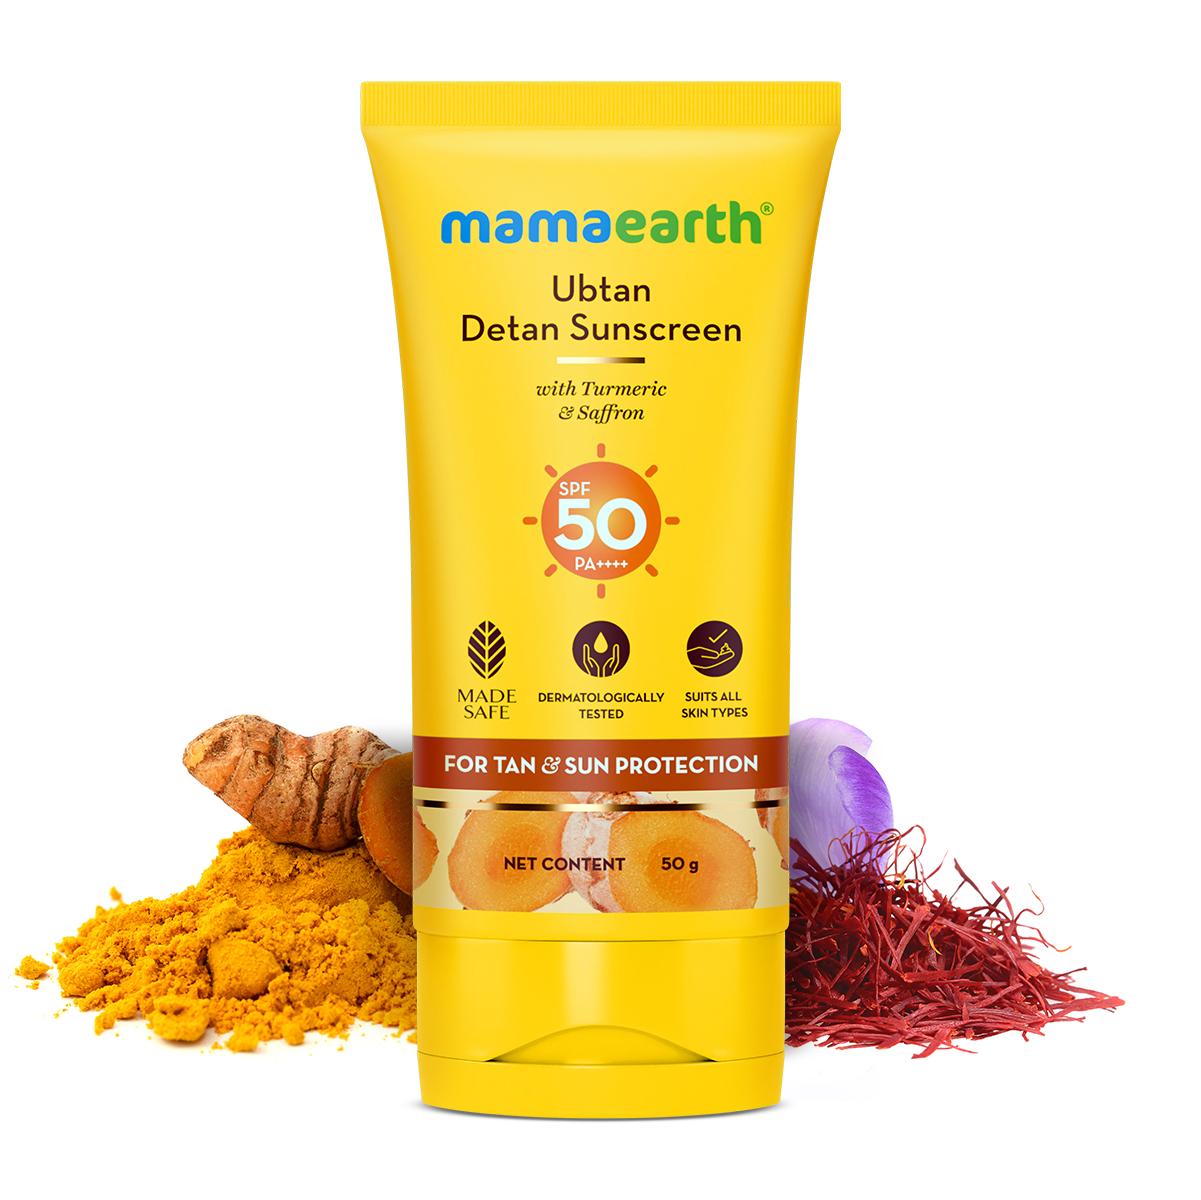 ubtan detan sunscreen with turmeric & saffron for sun protection - 50 g